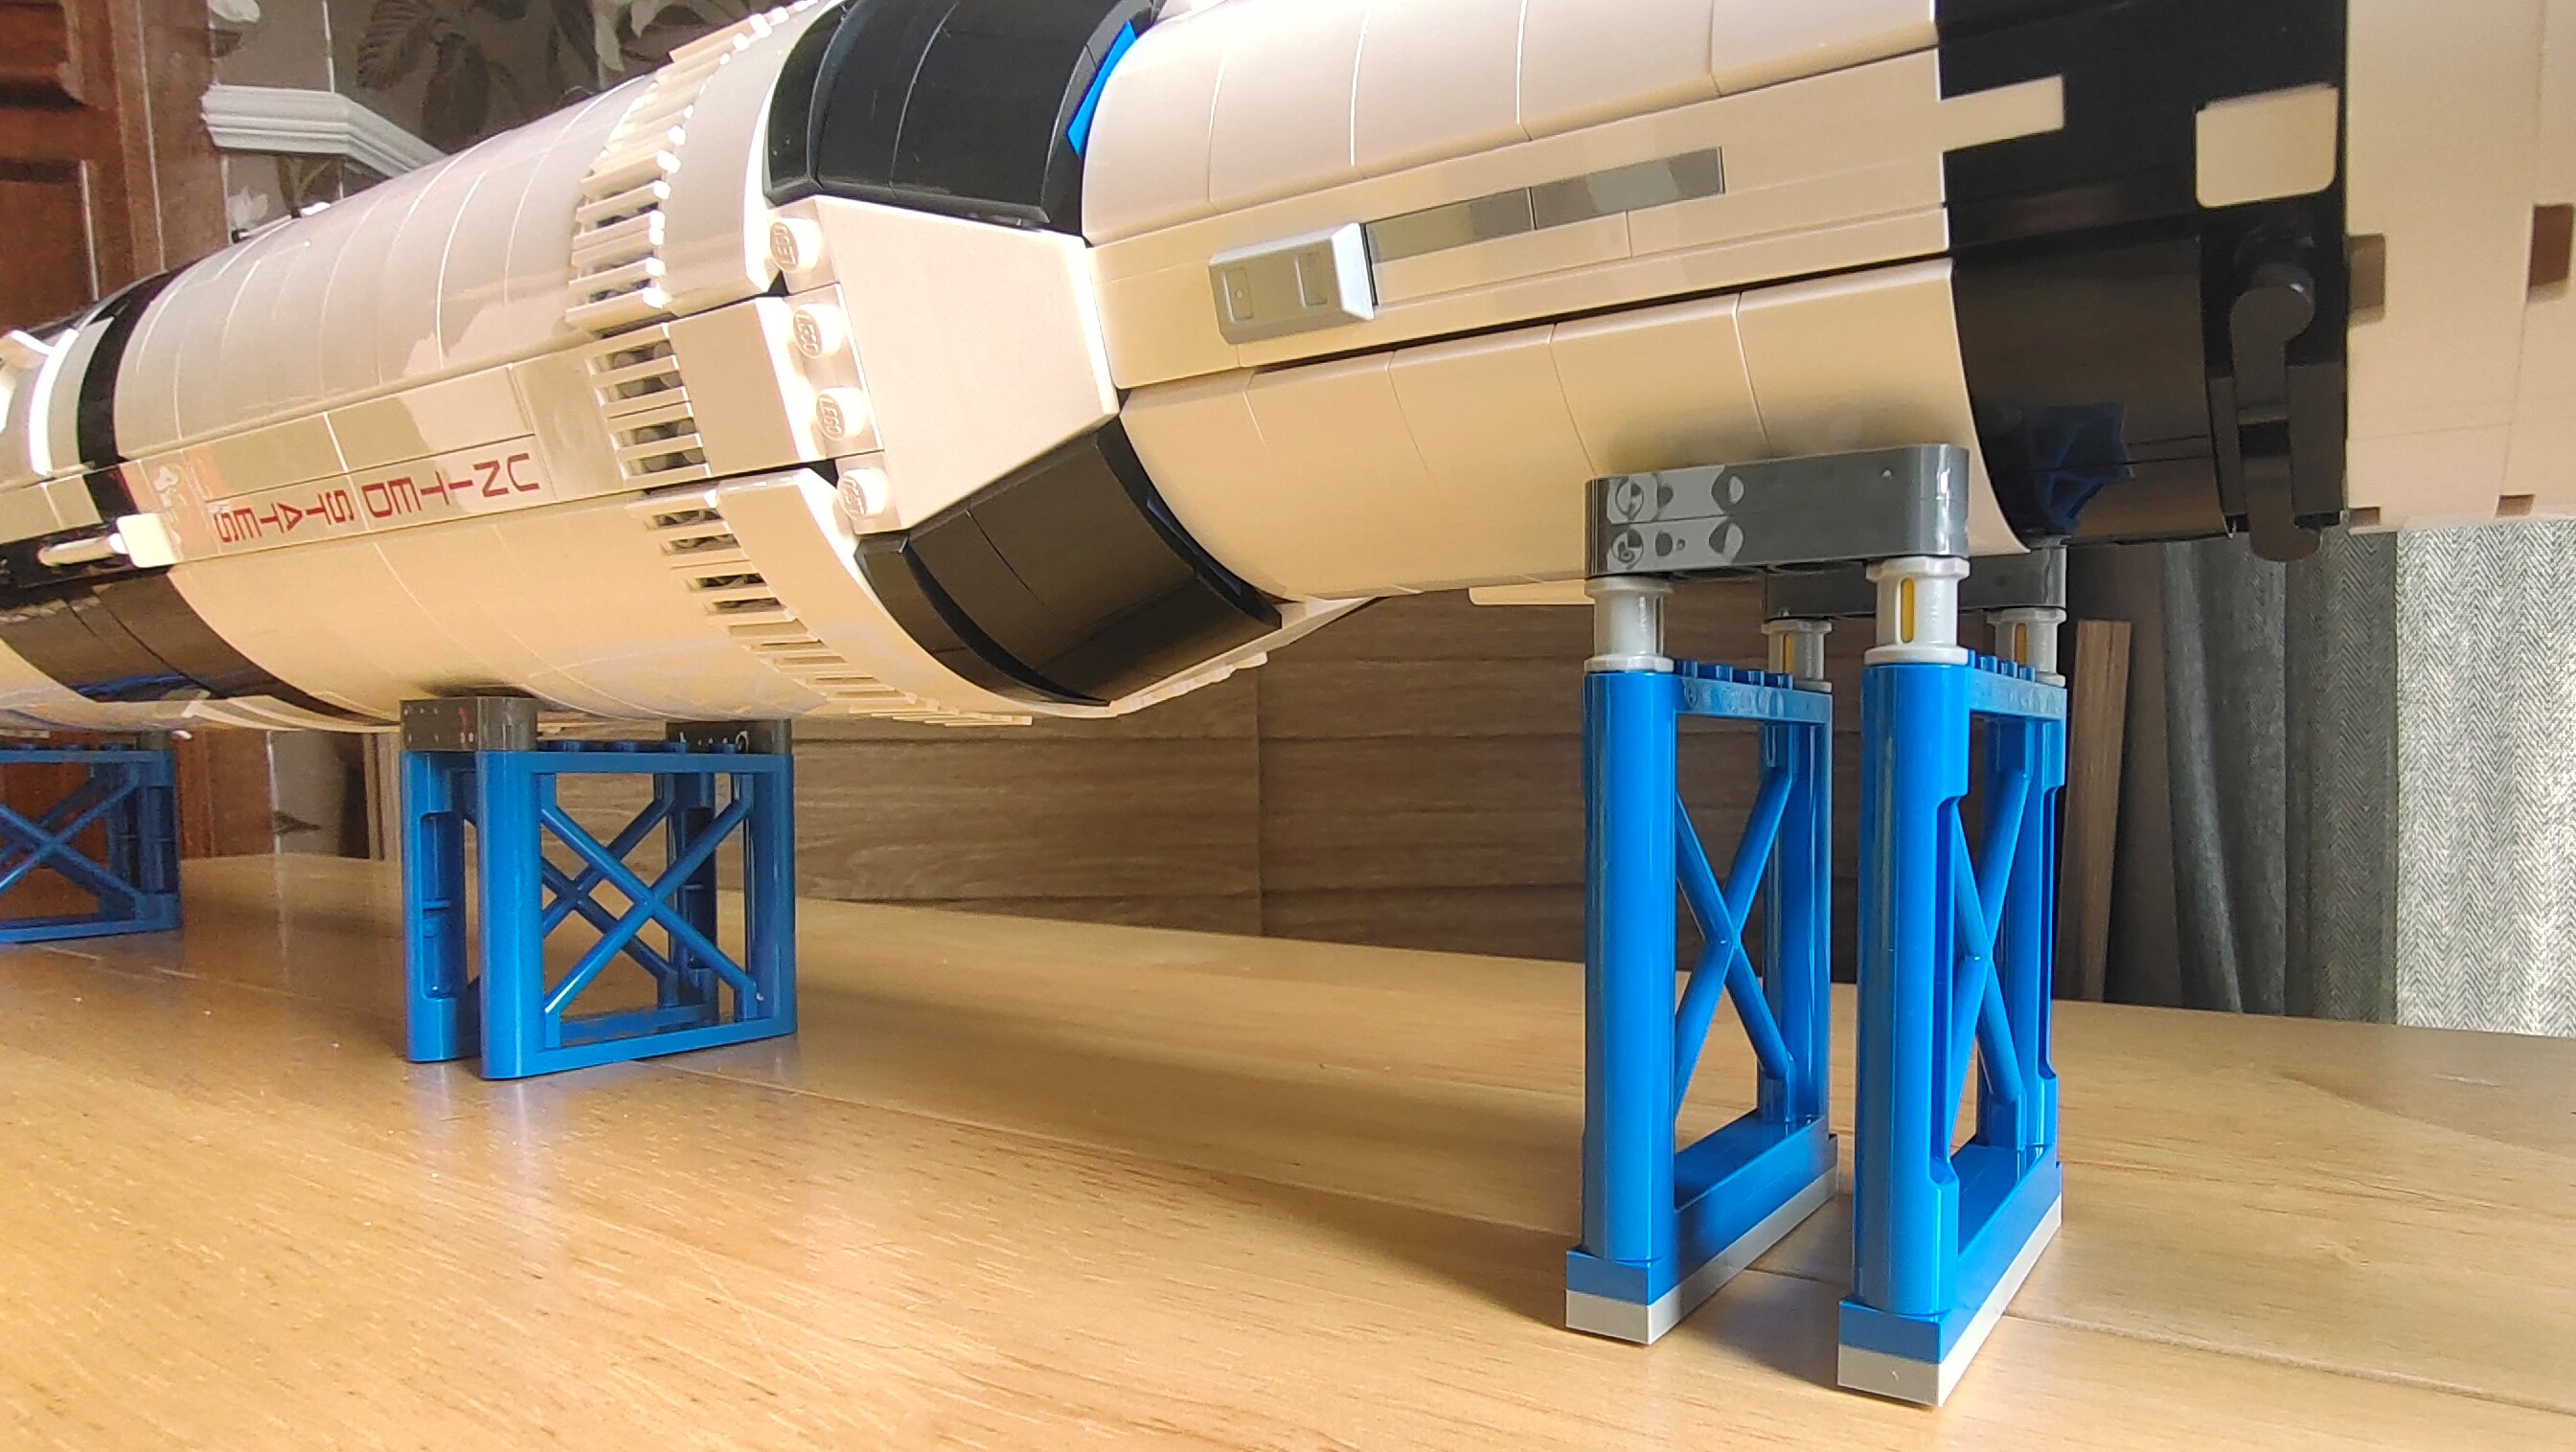 The Lego NASA Apollo Saturn V stand